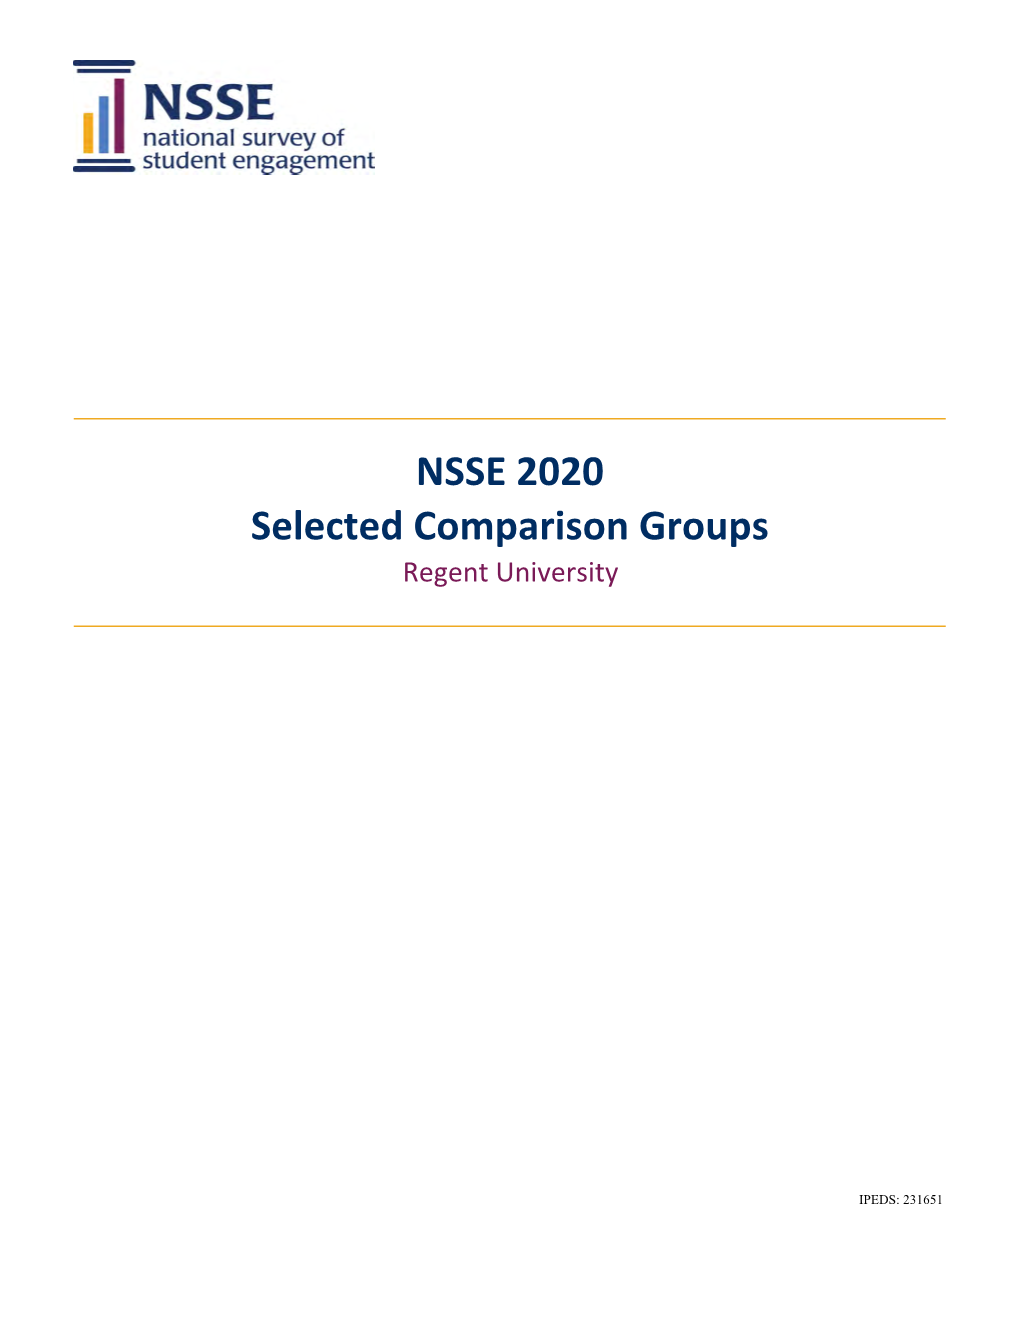 NSSE 2020 Selected Comparison Groups Regent University